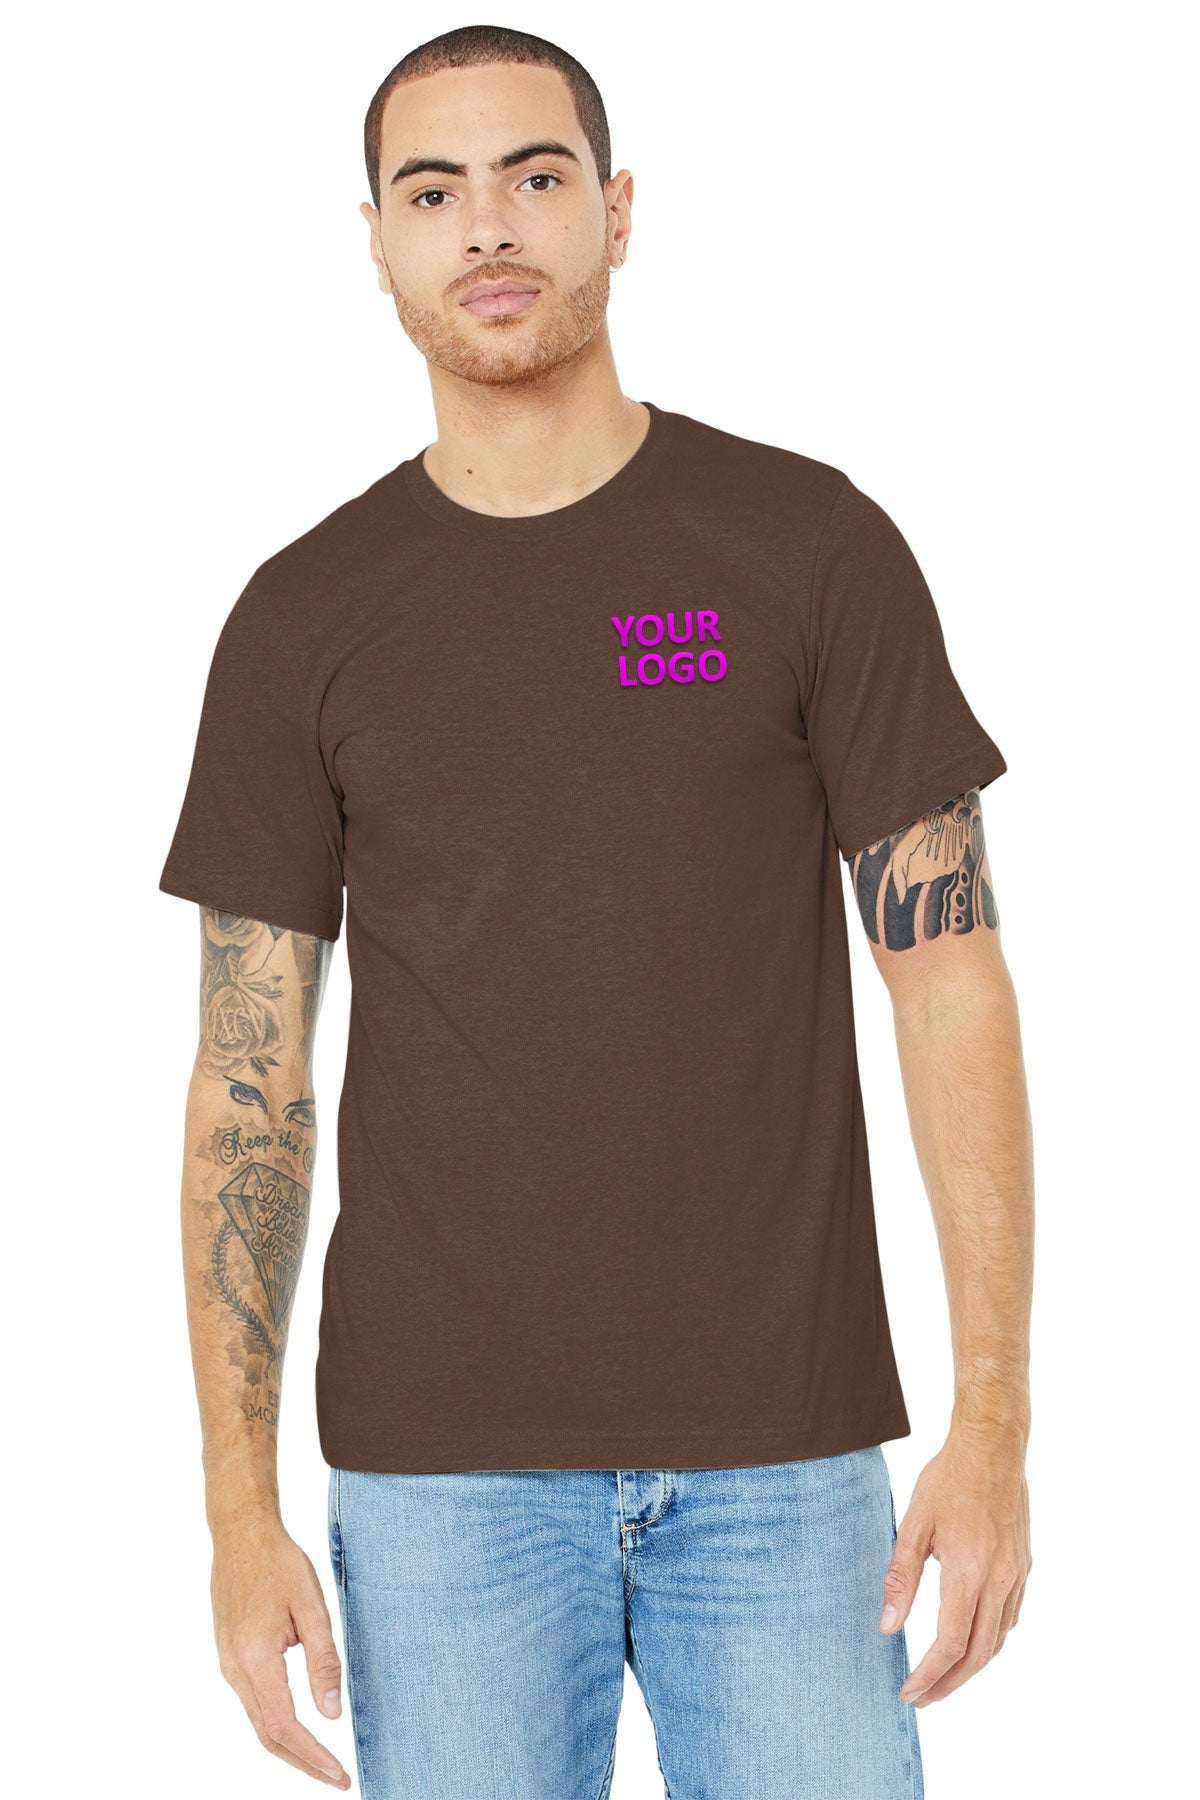 bella + canvas unisex jersey short sleeve t-shirt 3001cvc heather brown